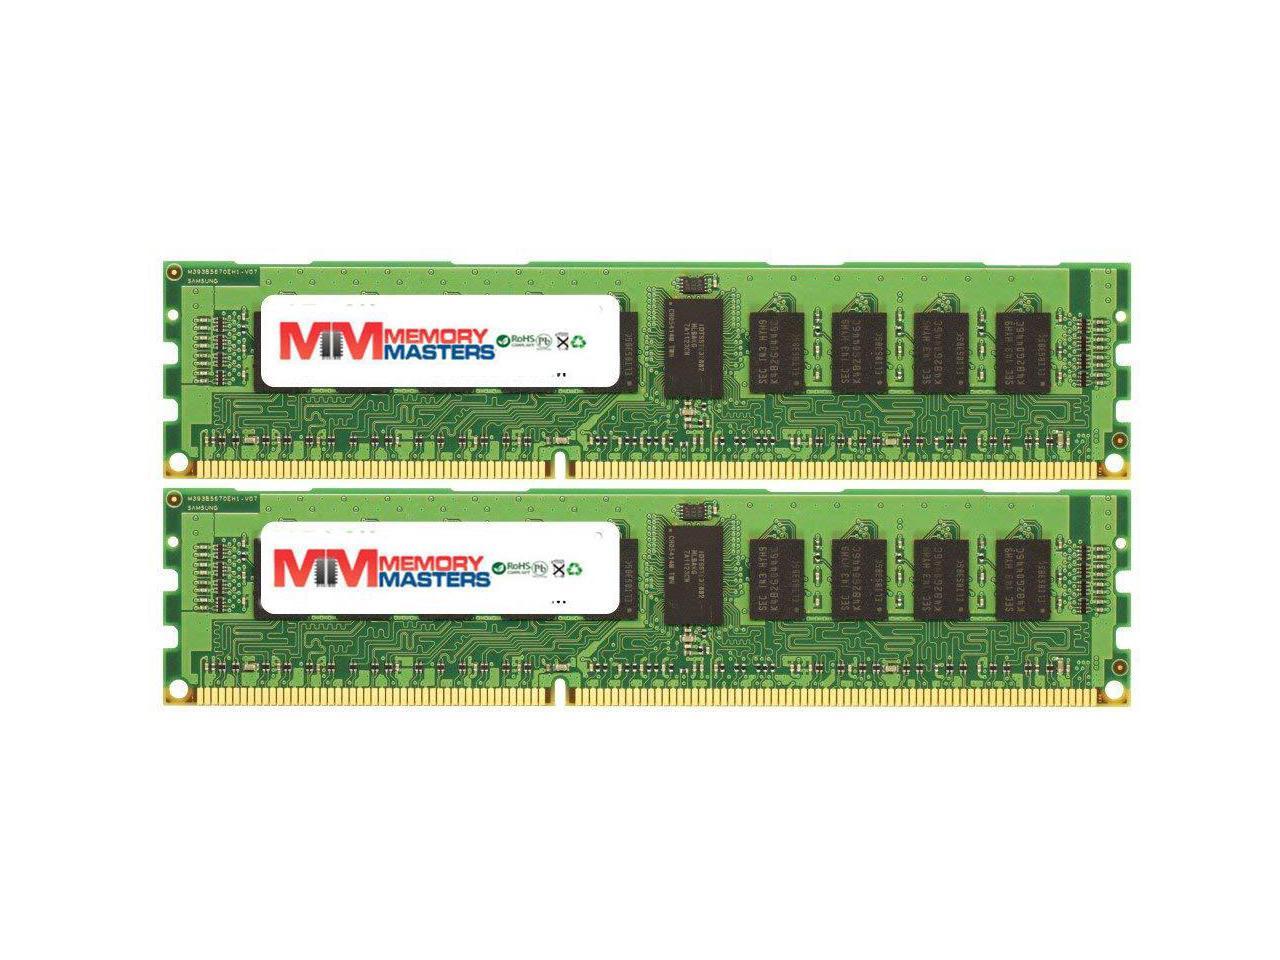 DIMM DDR2 ECC Unbuffered PC2-5300E 667MHz Dual Rank Server Ram Memory ECC Unbuffered 8GB KIT 4 x 2GB ECC Unbuffered for Dell Precision Workstation Series 380n T3400 Genuine A-Tech Brand.